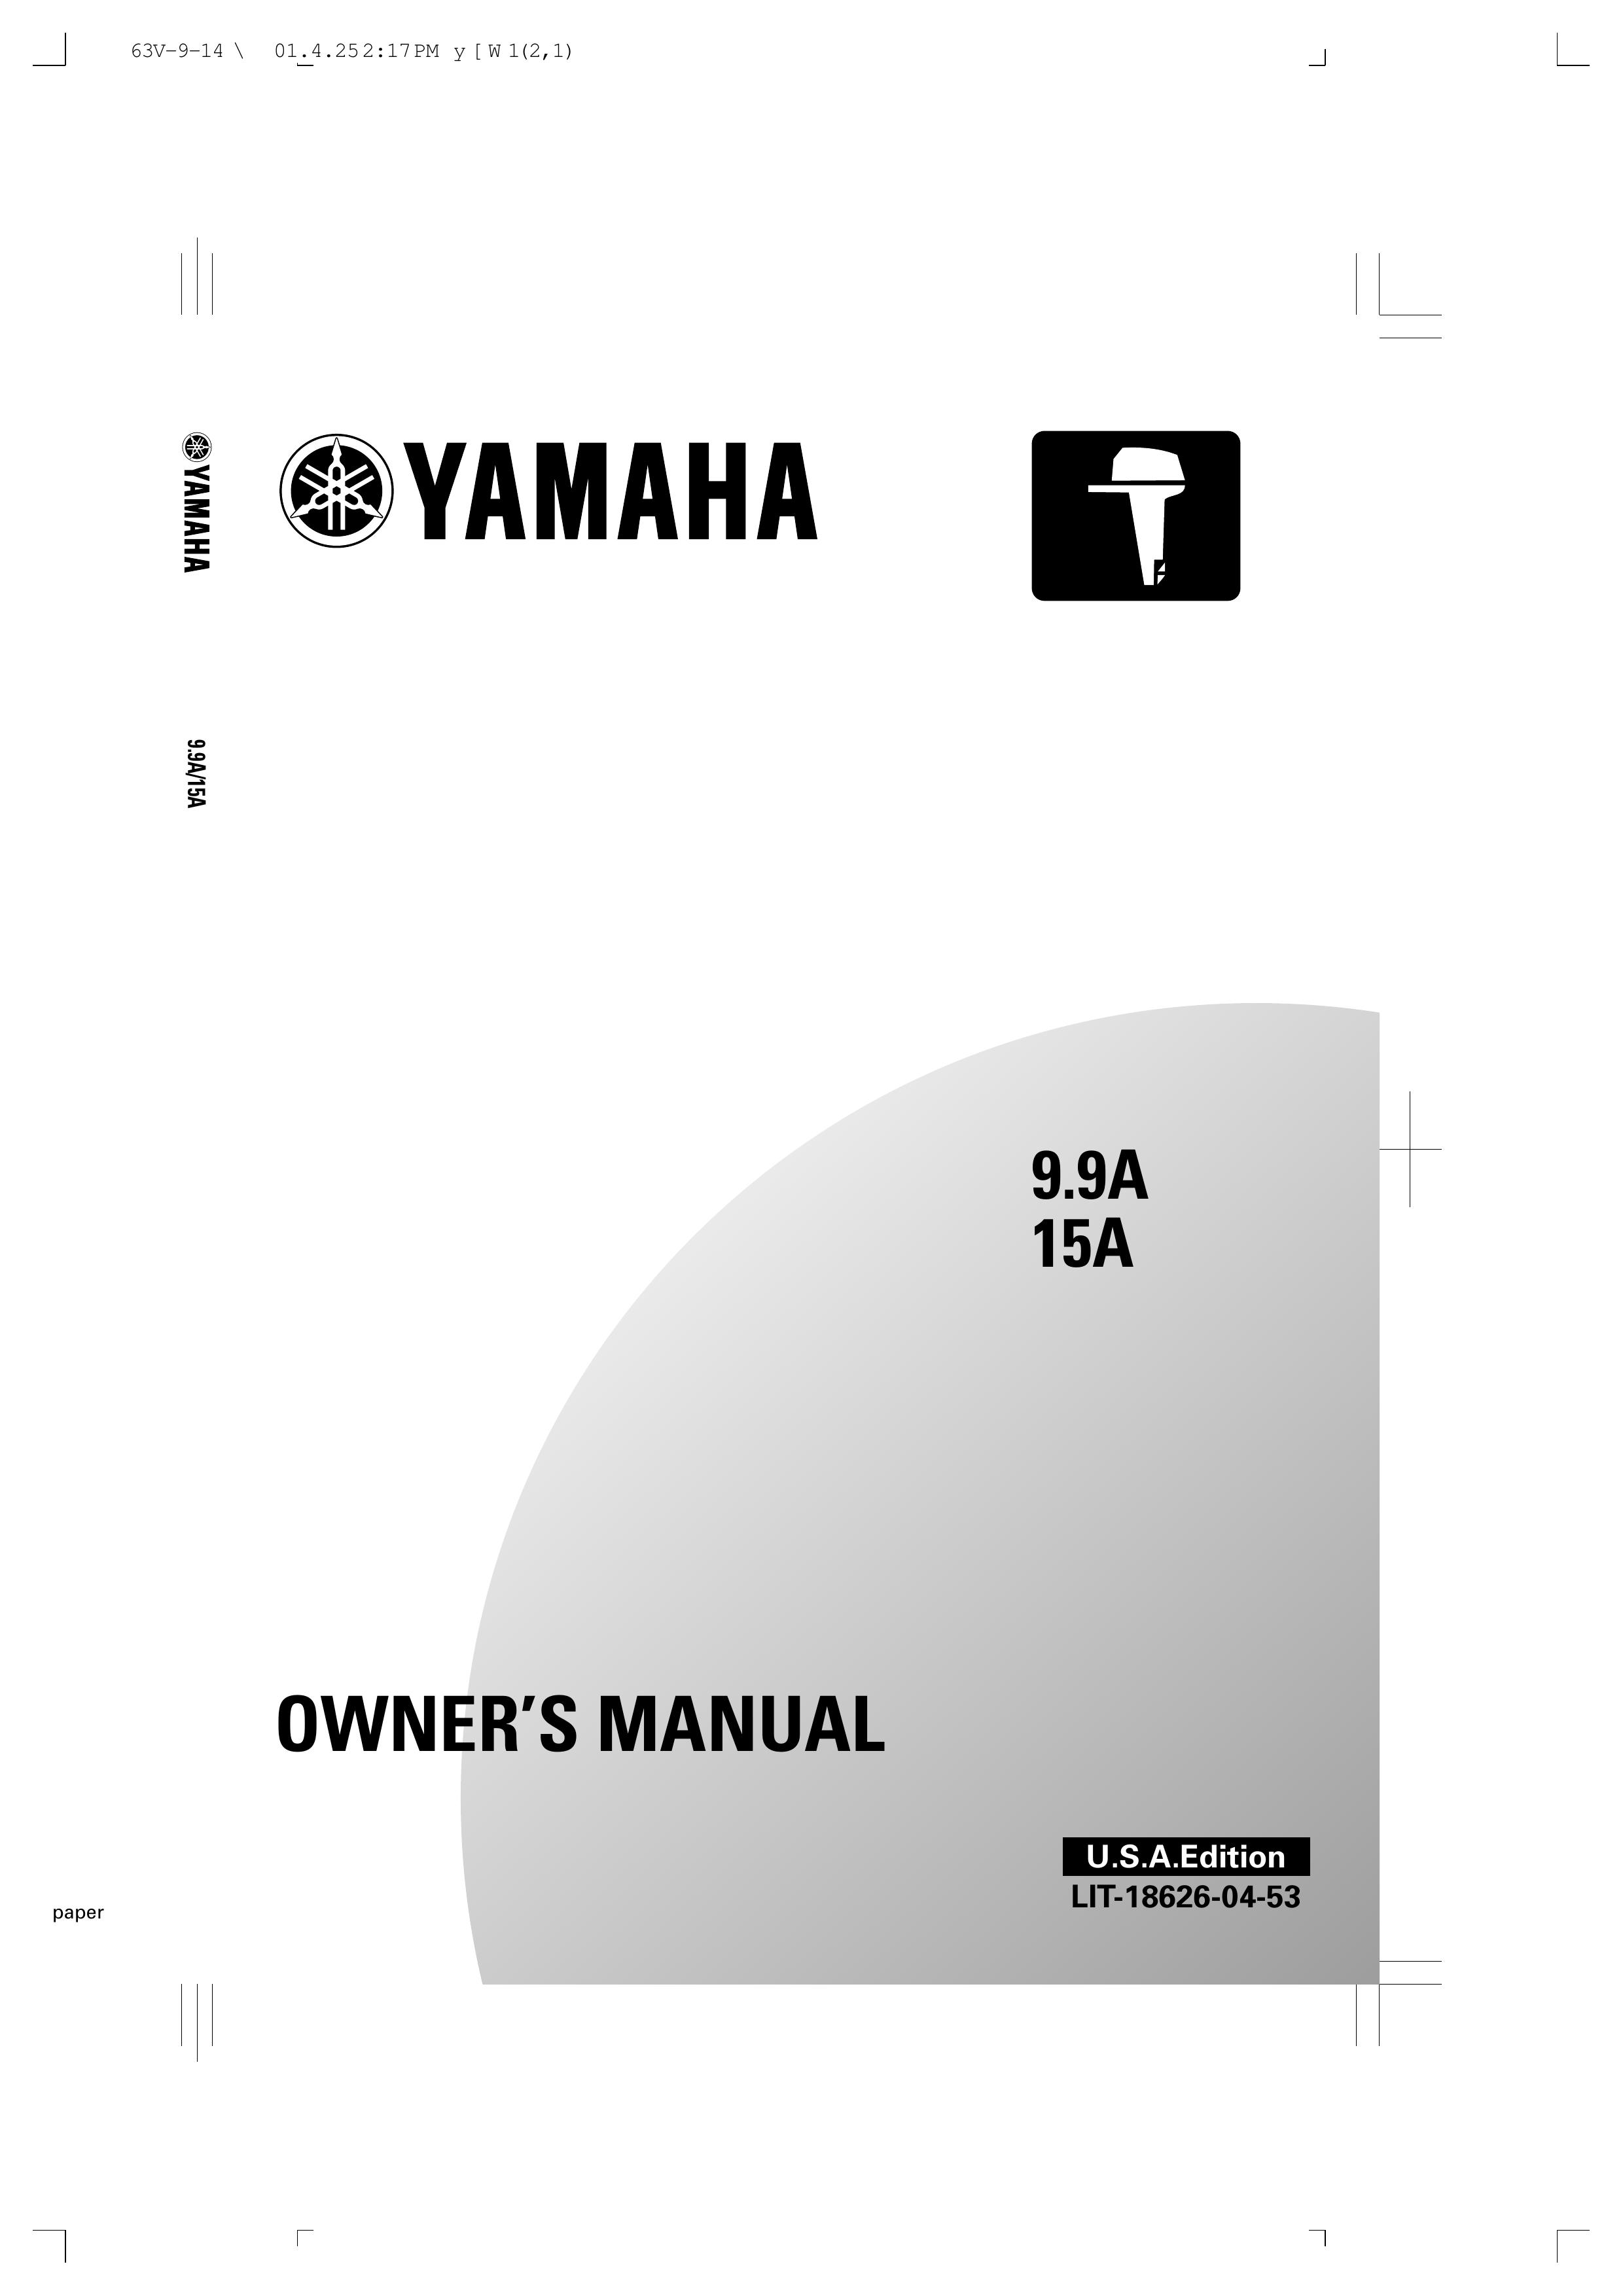 Yamaha 9.9A Outboard Motor User Manual